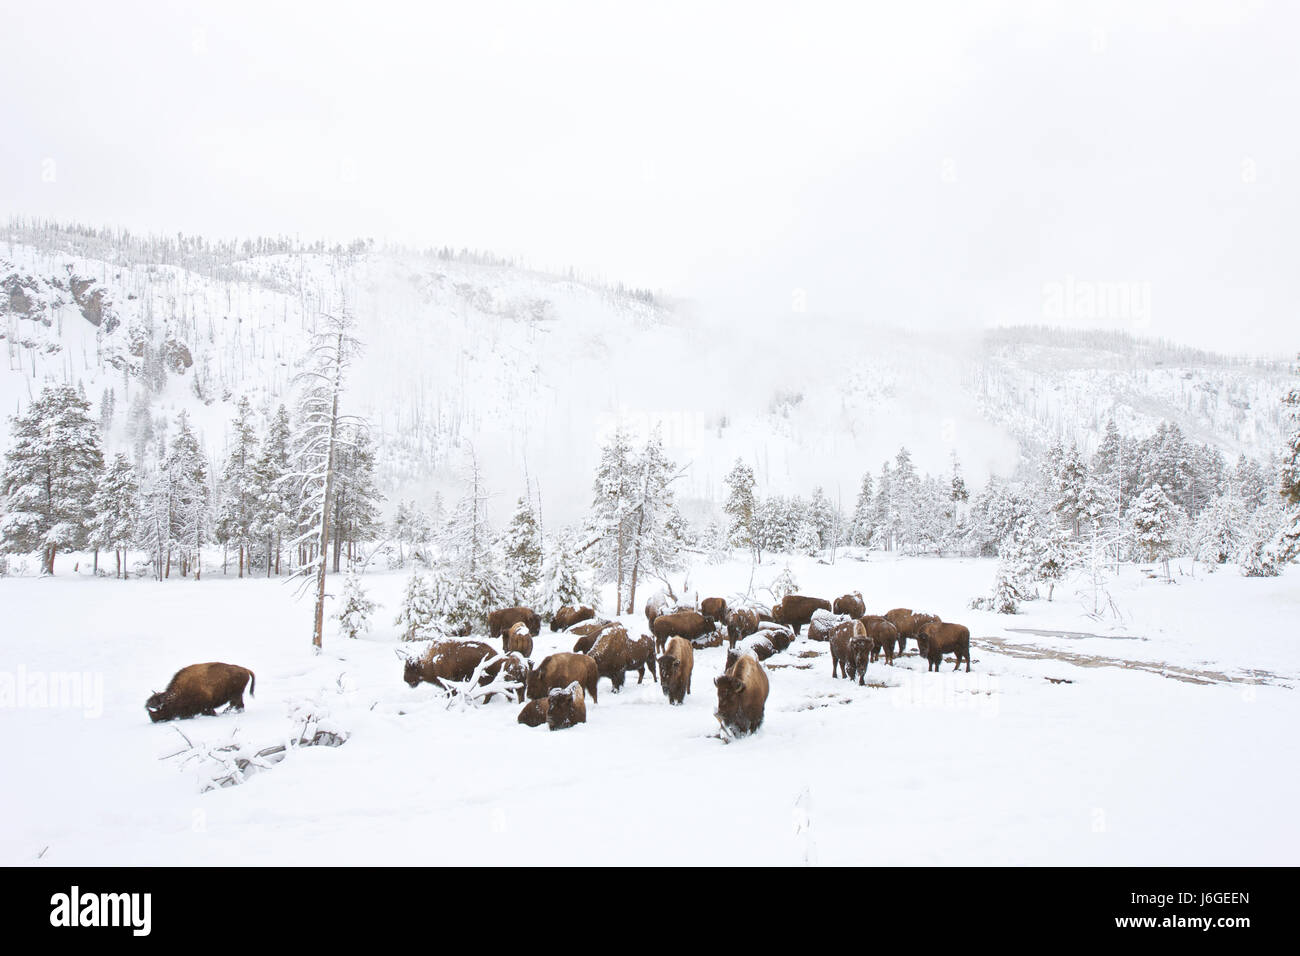 American bison (Bison bison) Stock Photo